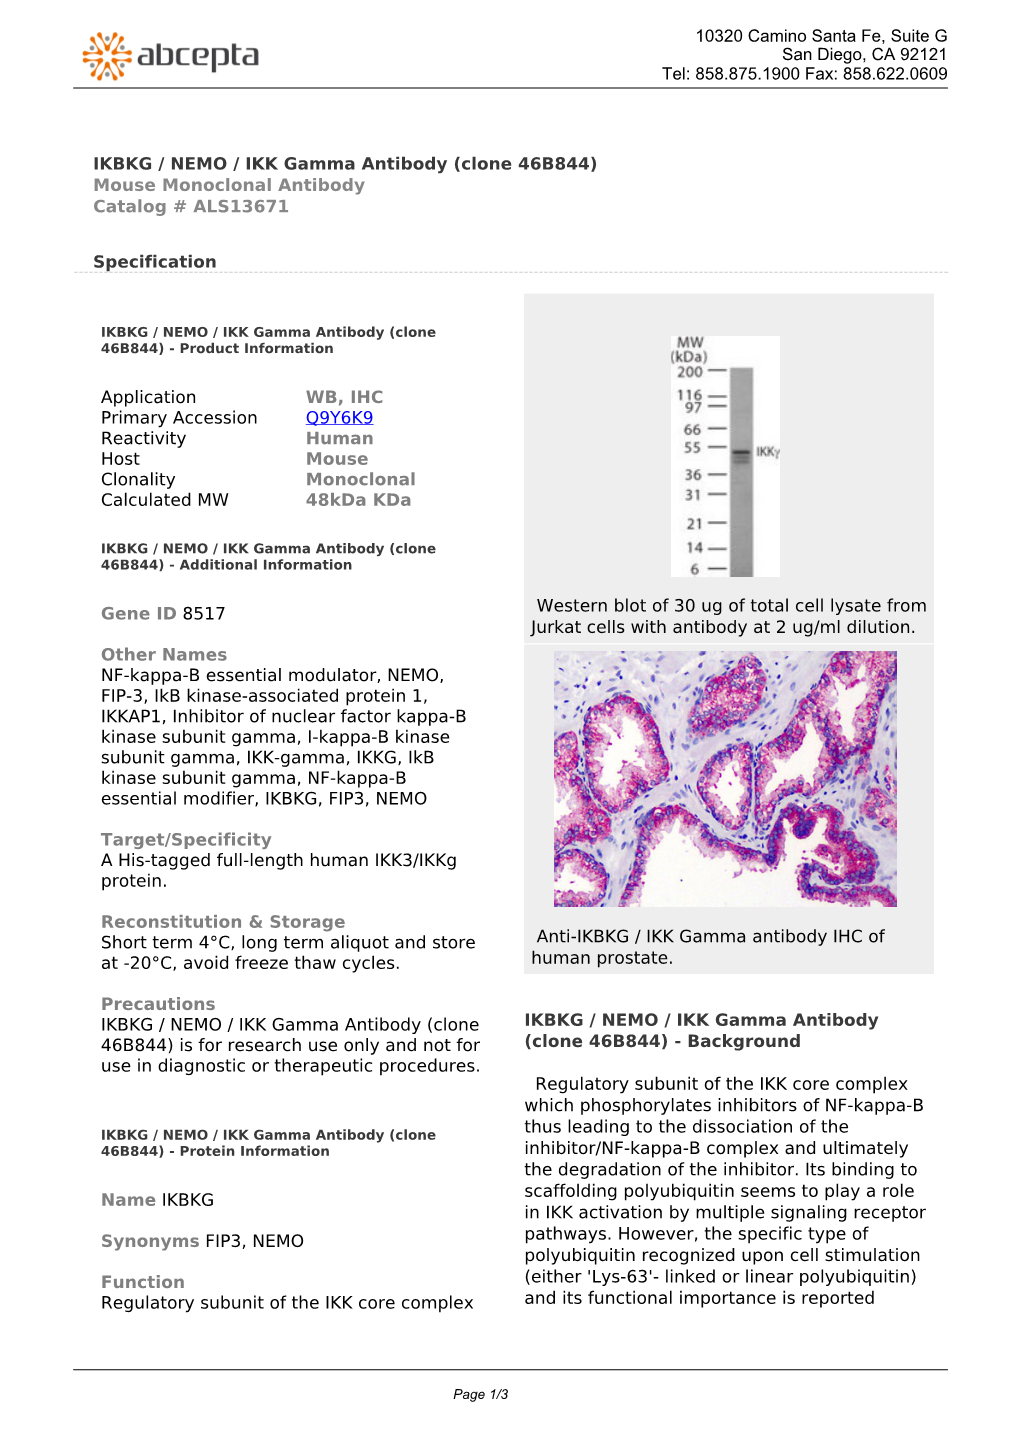 IKBKG / NEMO / IKK Gamma Antibody (Clone 46B844) Mouse Monoclonal Antibody Catalog # ALS13671